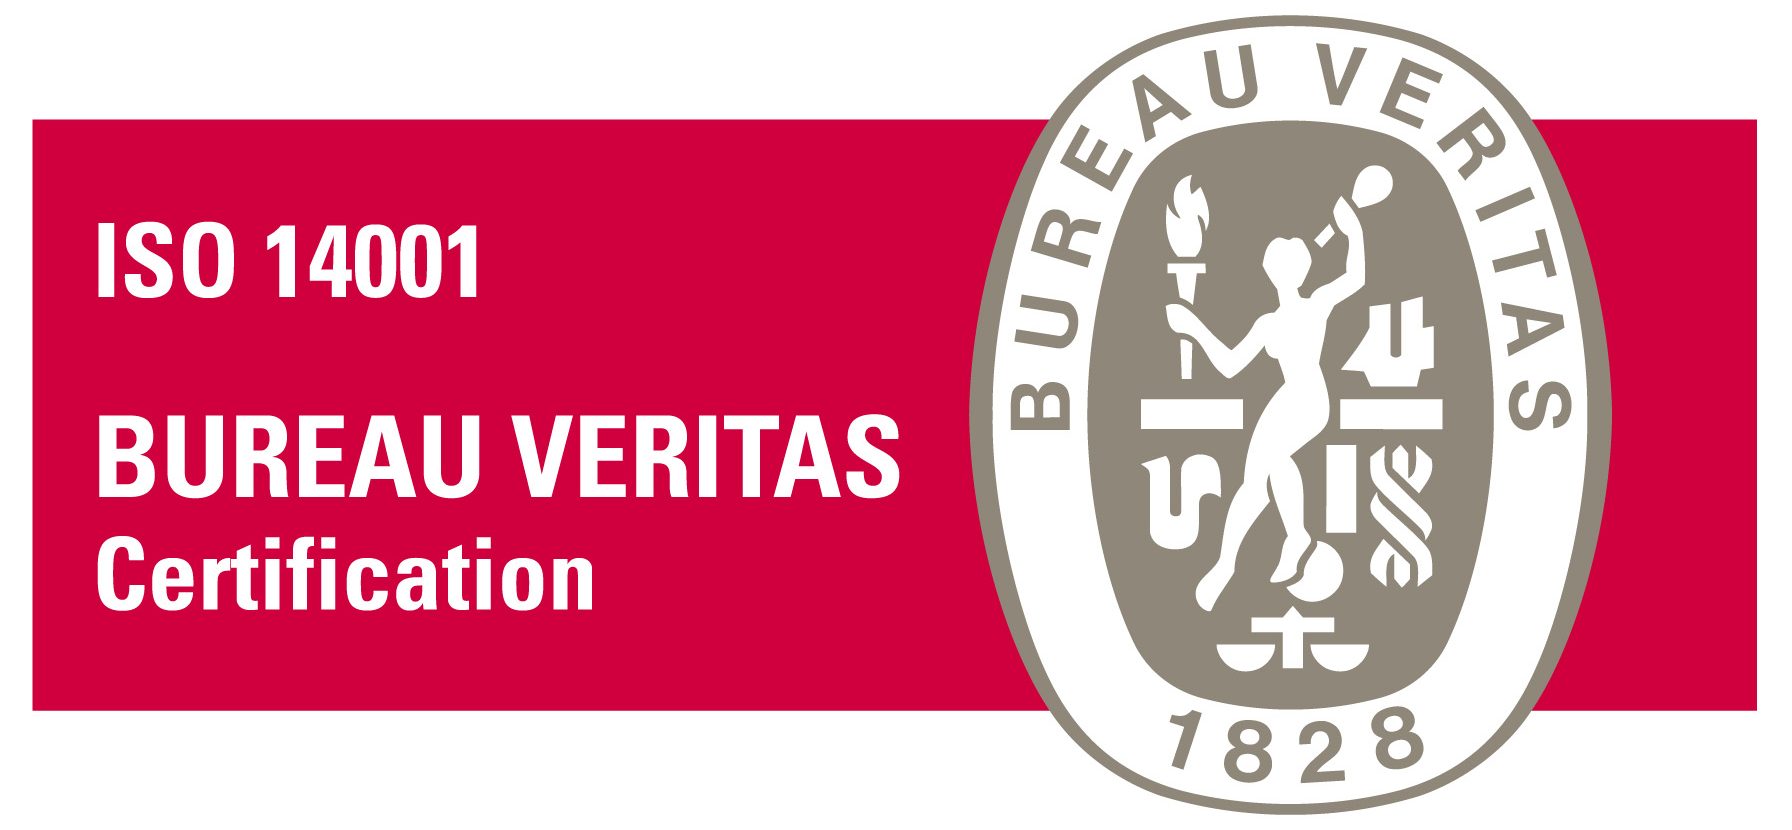 Bureau_Veritas_Certification_ISO14001